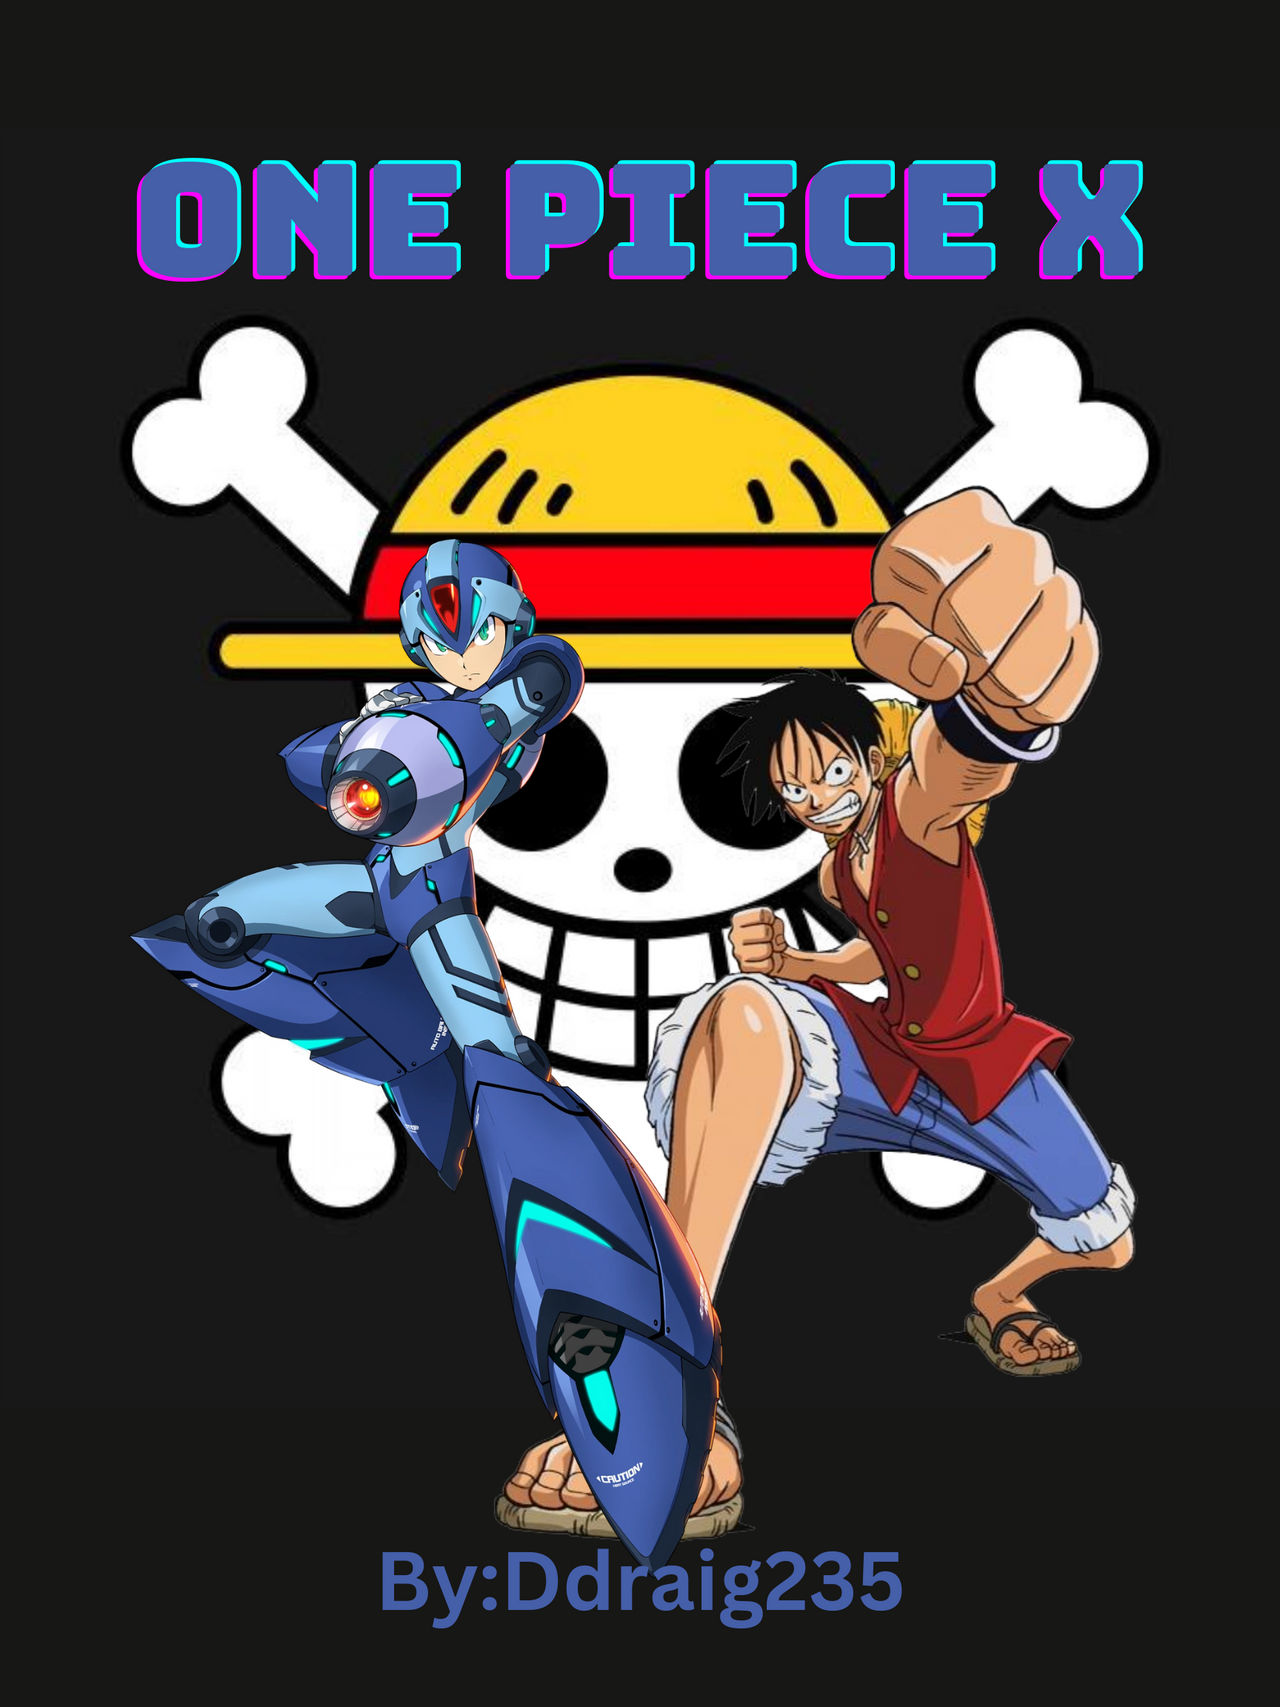 One Piece: X MARKS THE SPOT by devilsxprince on DeviantArt